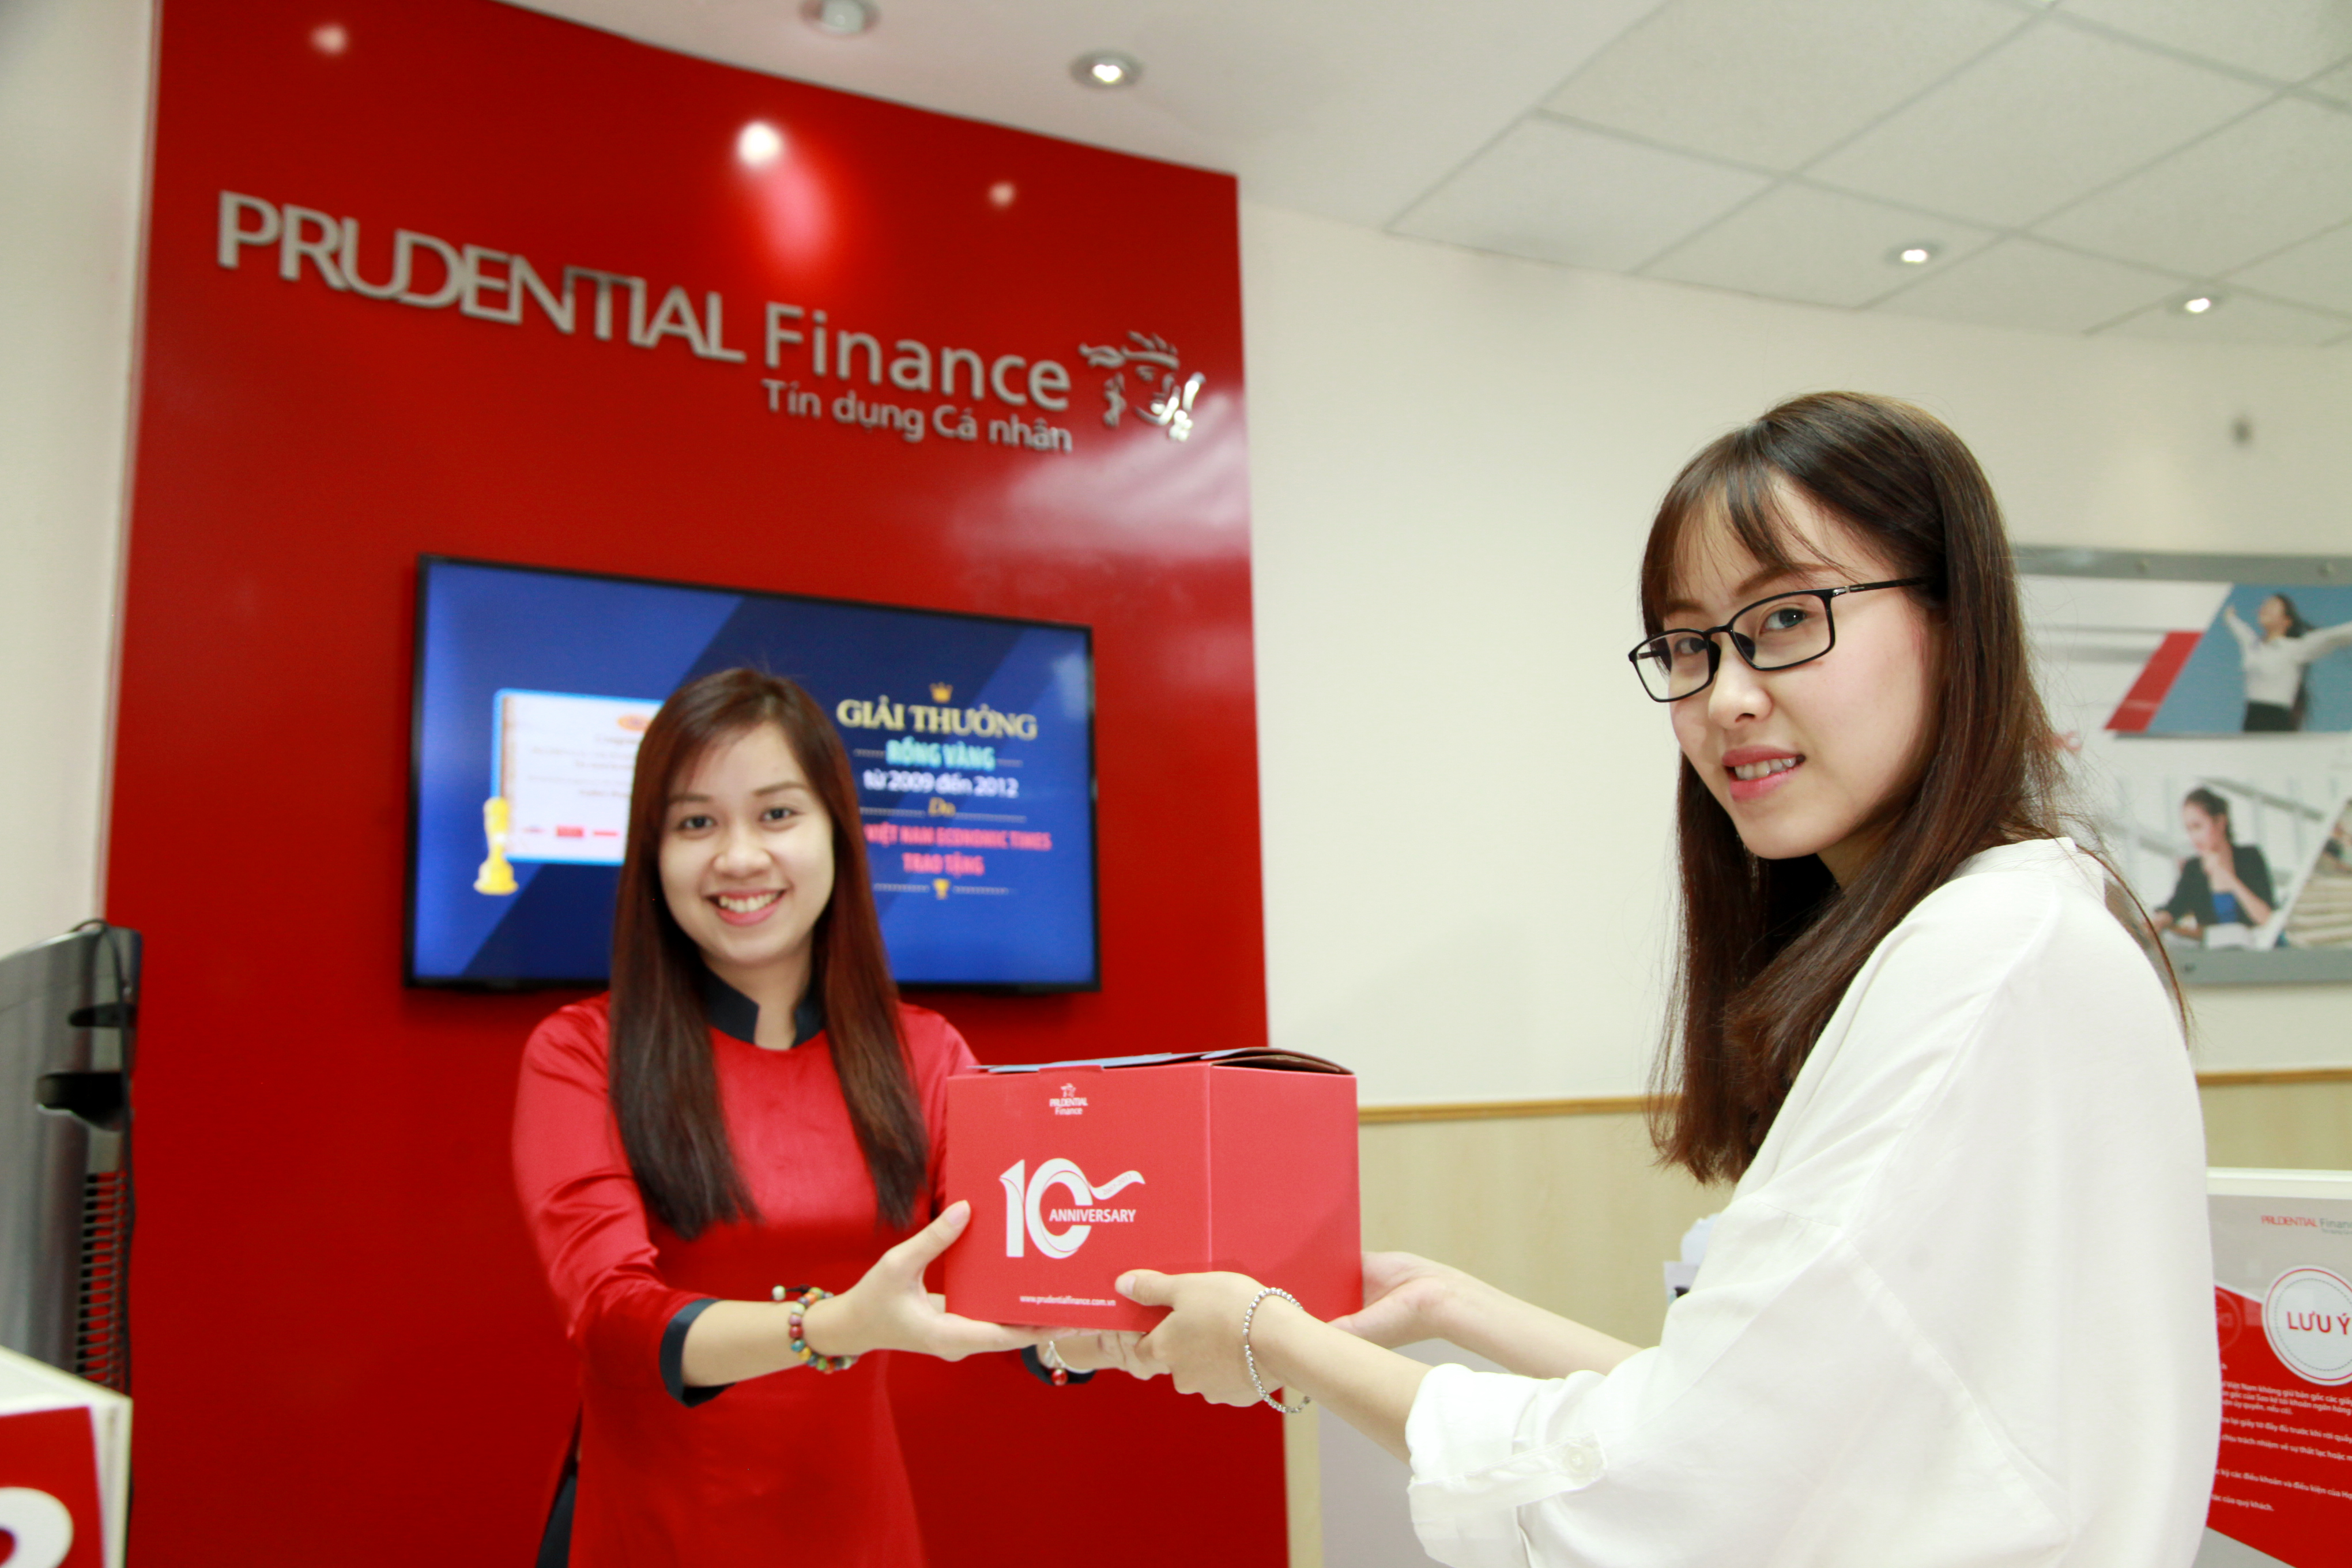 Prudential Finance celebrates its 10th anniversary in Vietnam